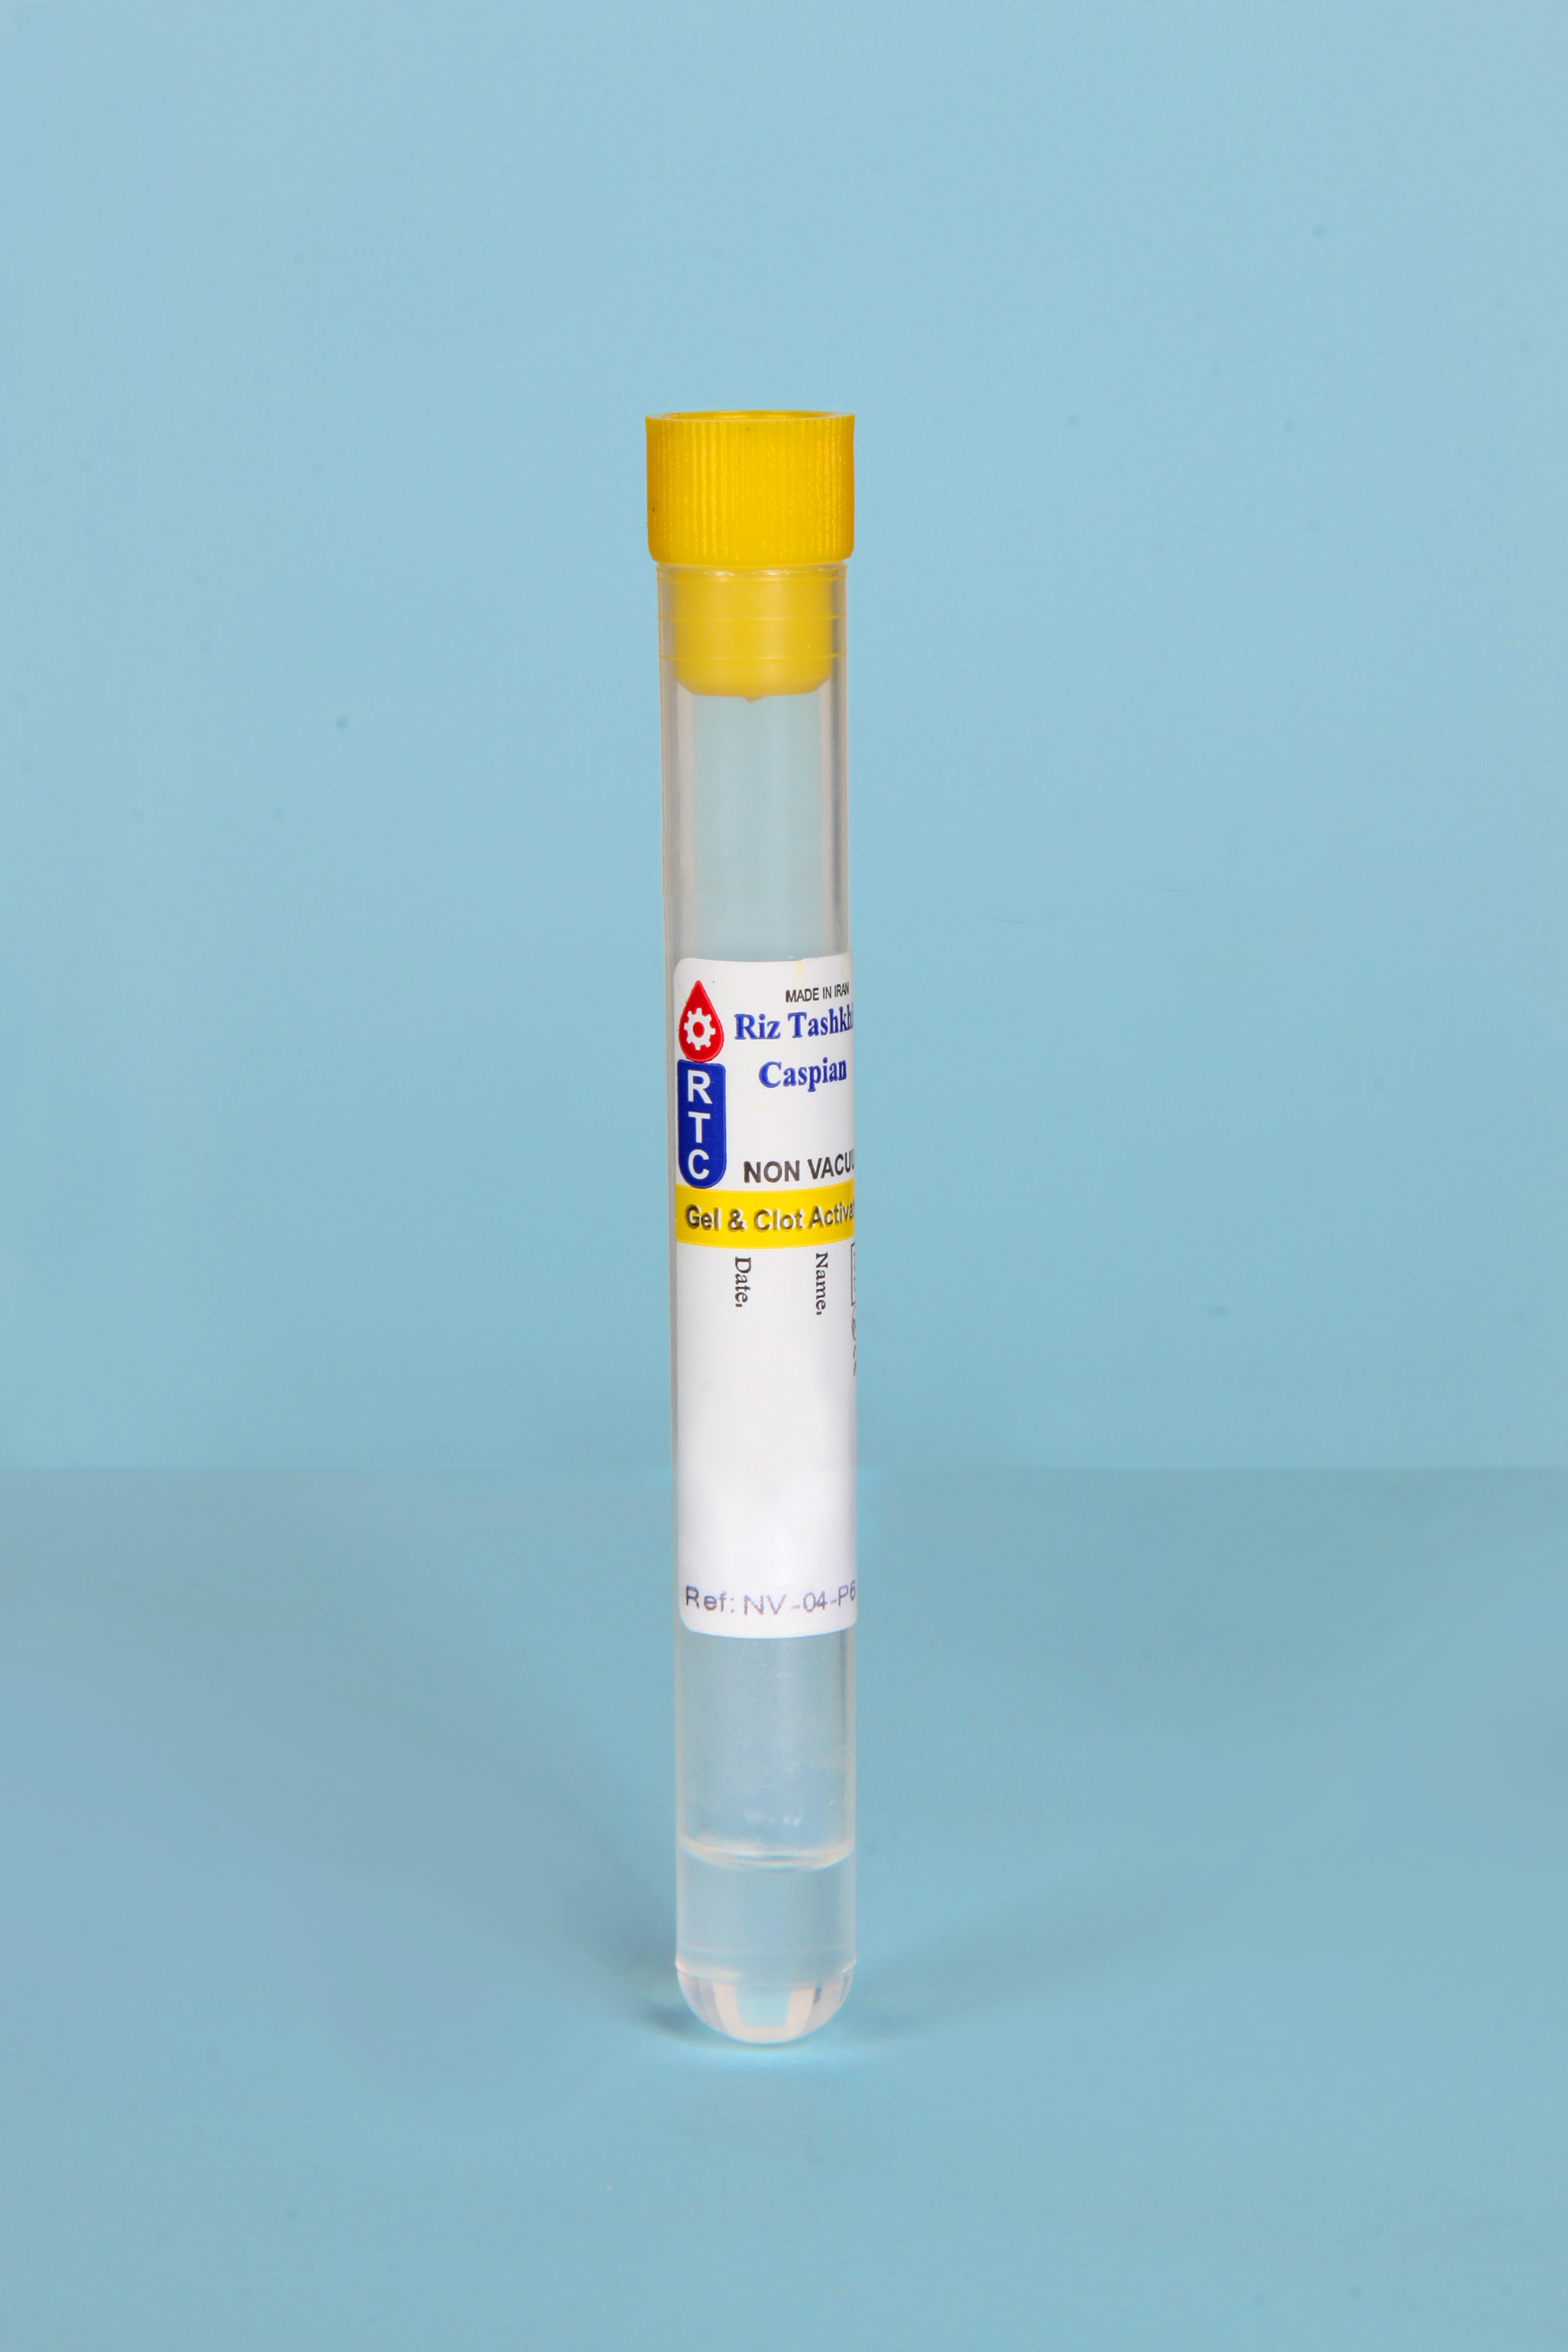 لوله خون گیری حاوی Clot Activator & Gel (بدون خلاء)- 6ml - Non Vacuum Blood Collection Test Tube  Clot Activator & Gel- 6ml - RTC - مصرفی - بیوشیمی - ریز تشخیص کاسپین